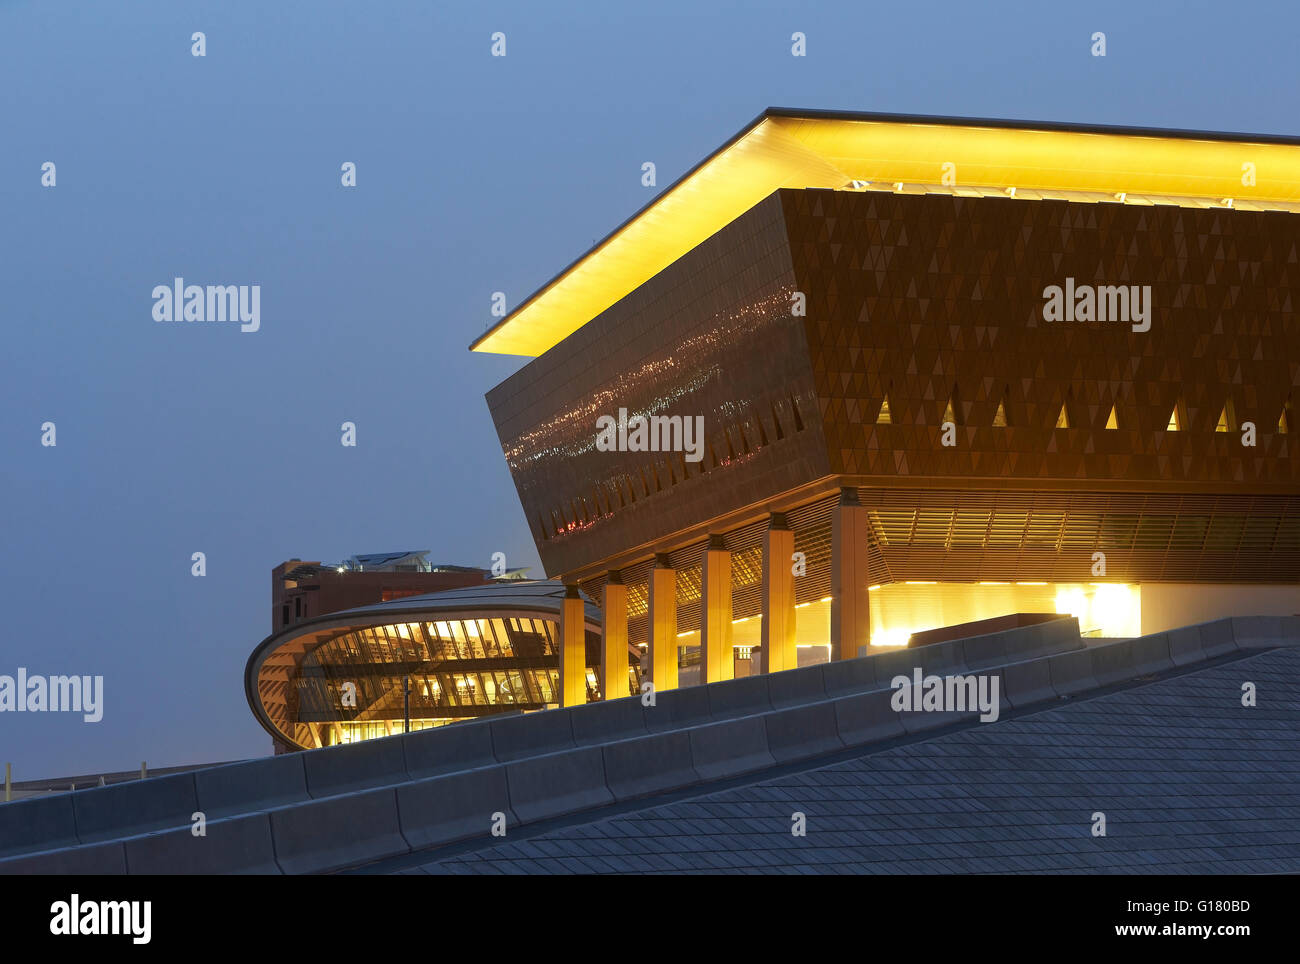 Corner elevation of lit up Incubator building. Masdar City, Masdar City, United Arab Emirates. Architect: various, 2014. Stock Photo